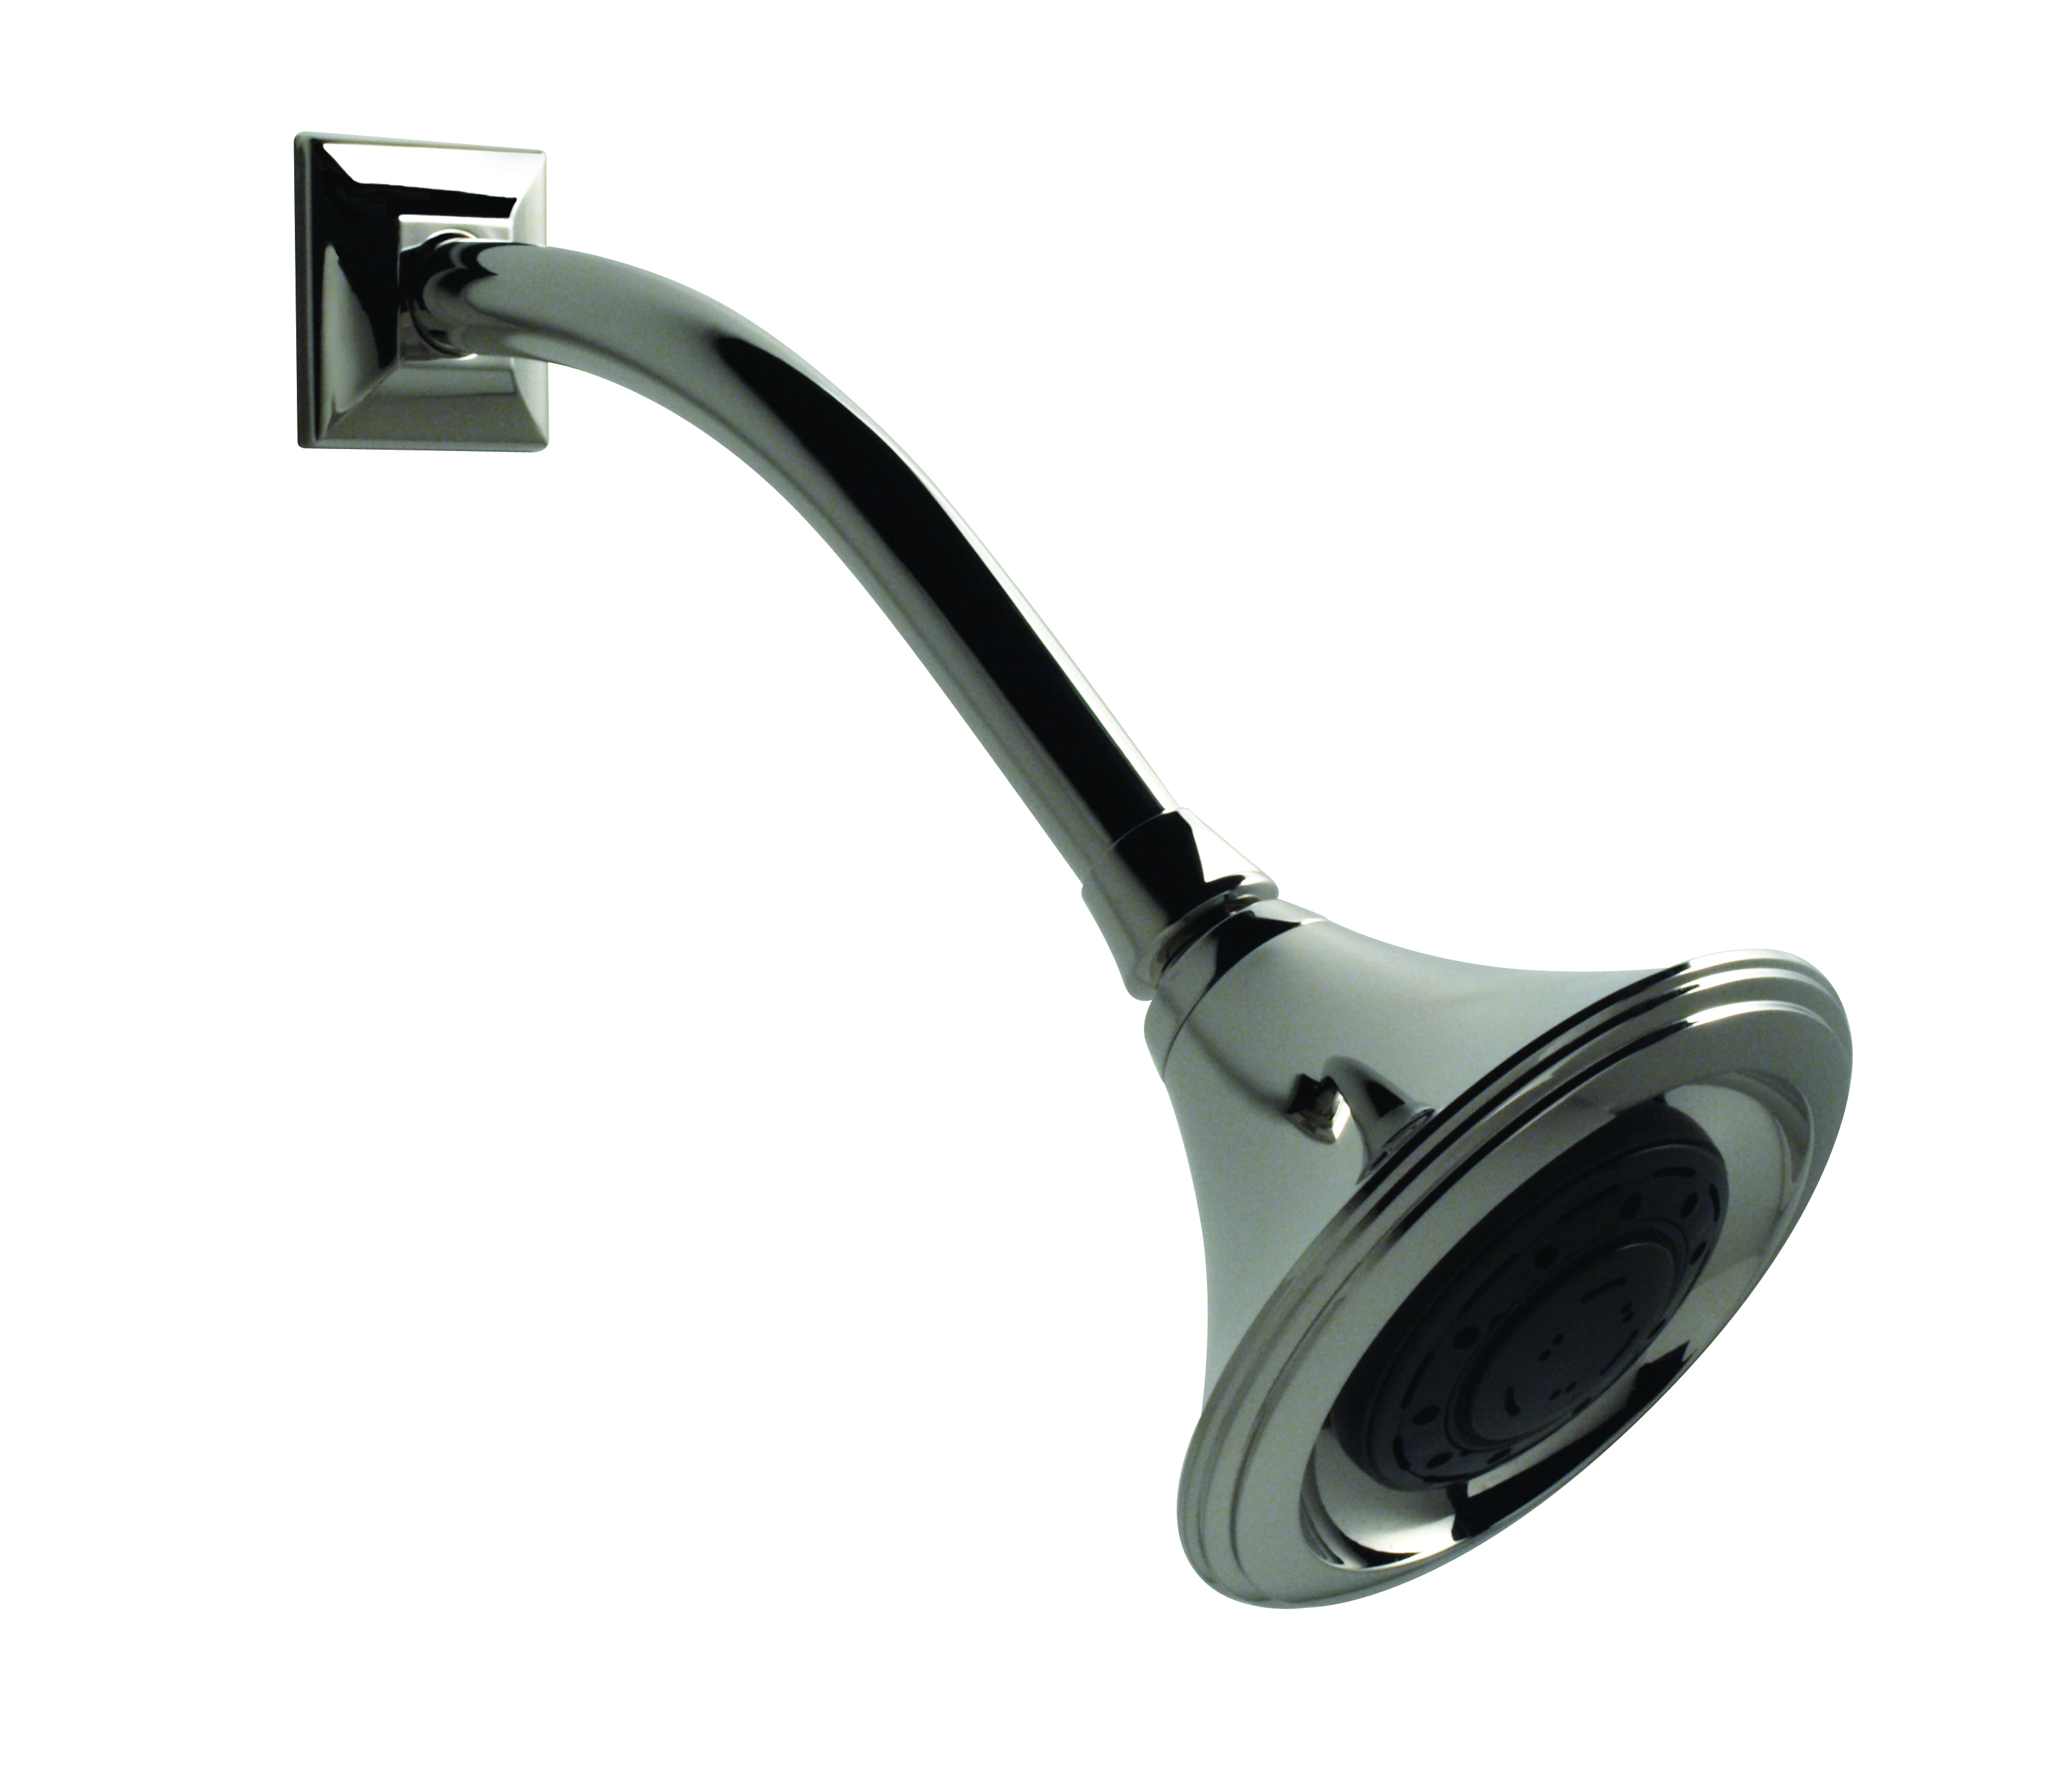 Santec 92852310 Edo Torrent Shower Head with Arm and Flange - Polished Chrome